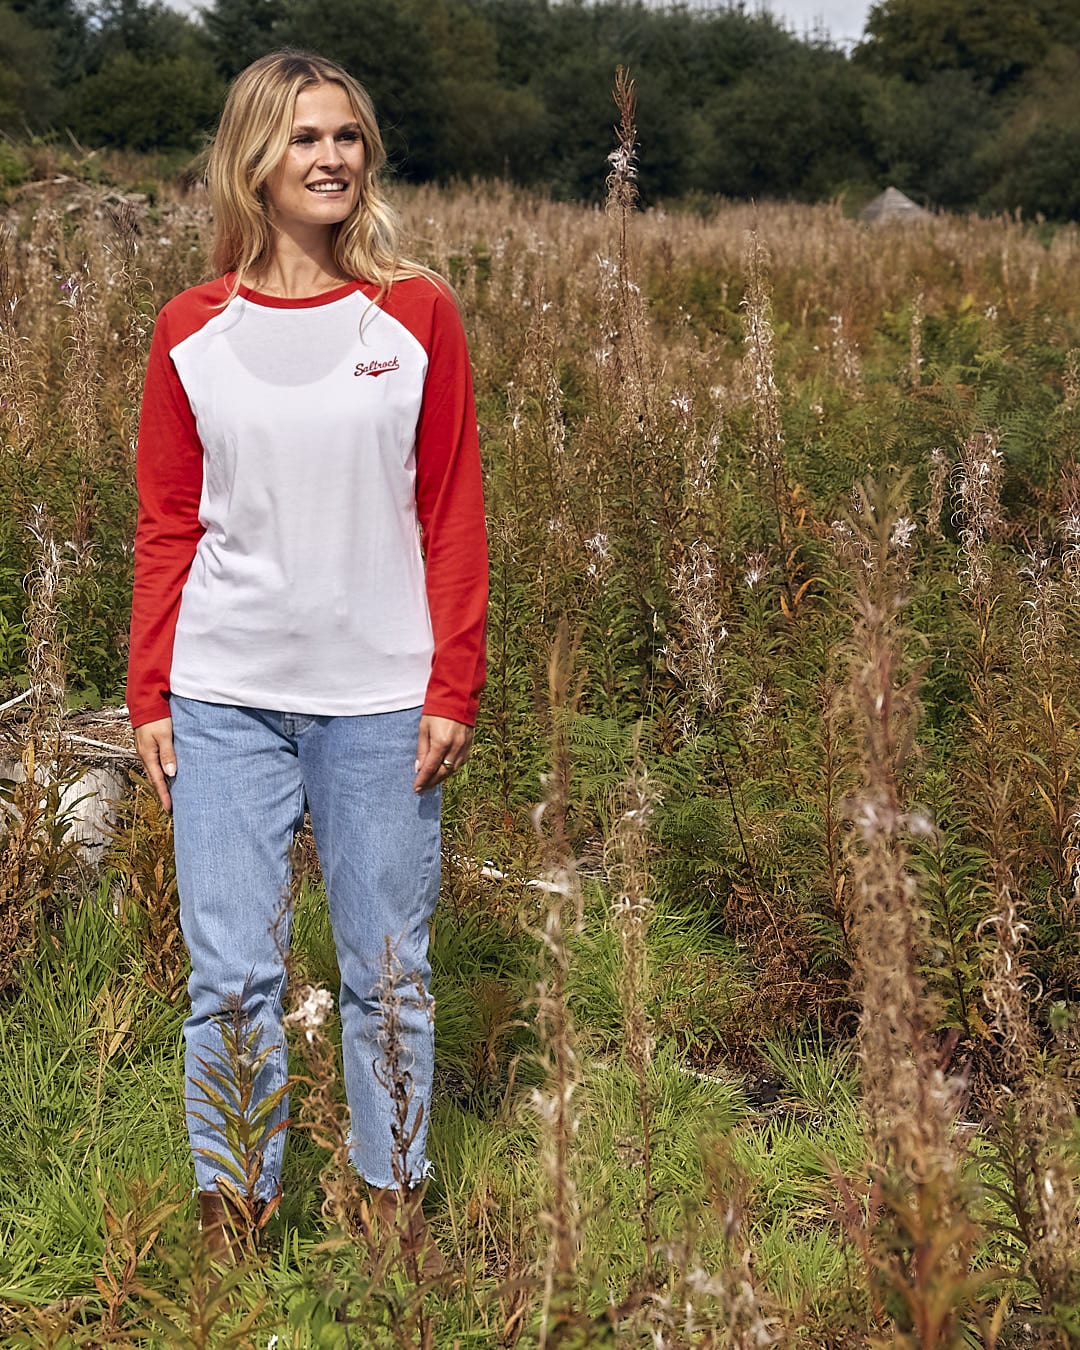 A woman standing in a field wearing a Saltrock Carolina - Womens Long Sleeve Raglan T-Shirt - Red/White.